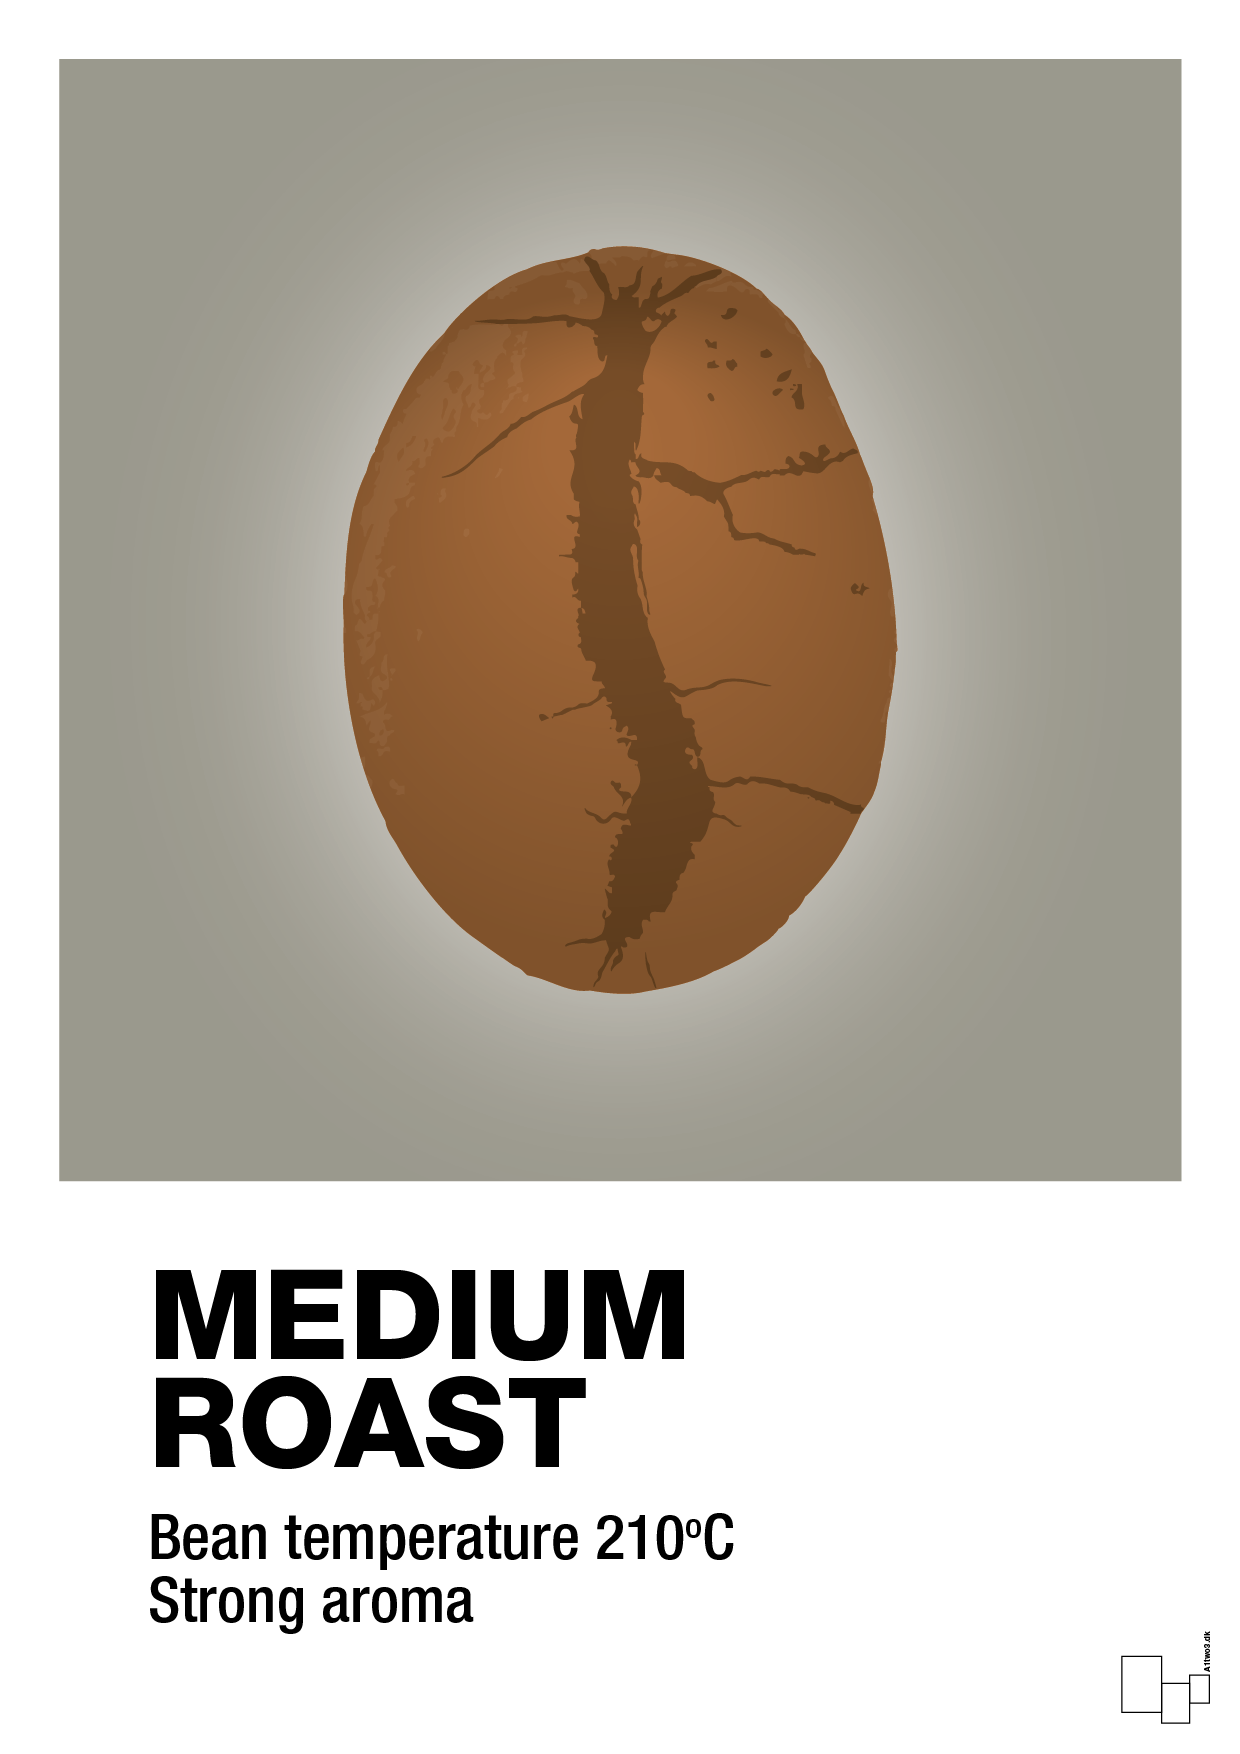 medium roast - Plakat med Mad & Drikke i Battleship Gray